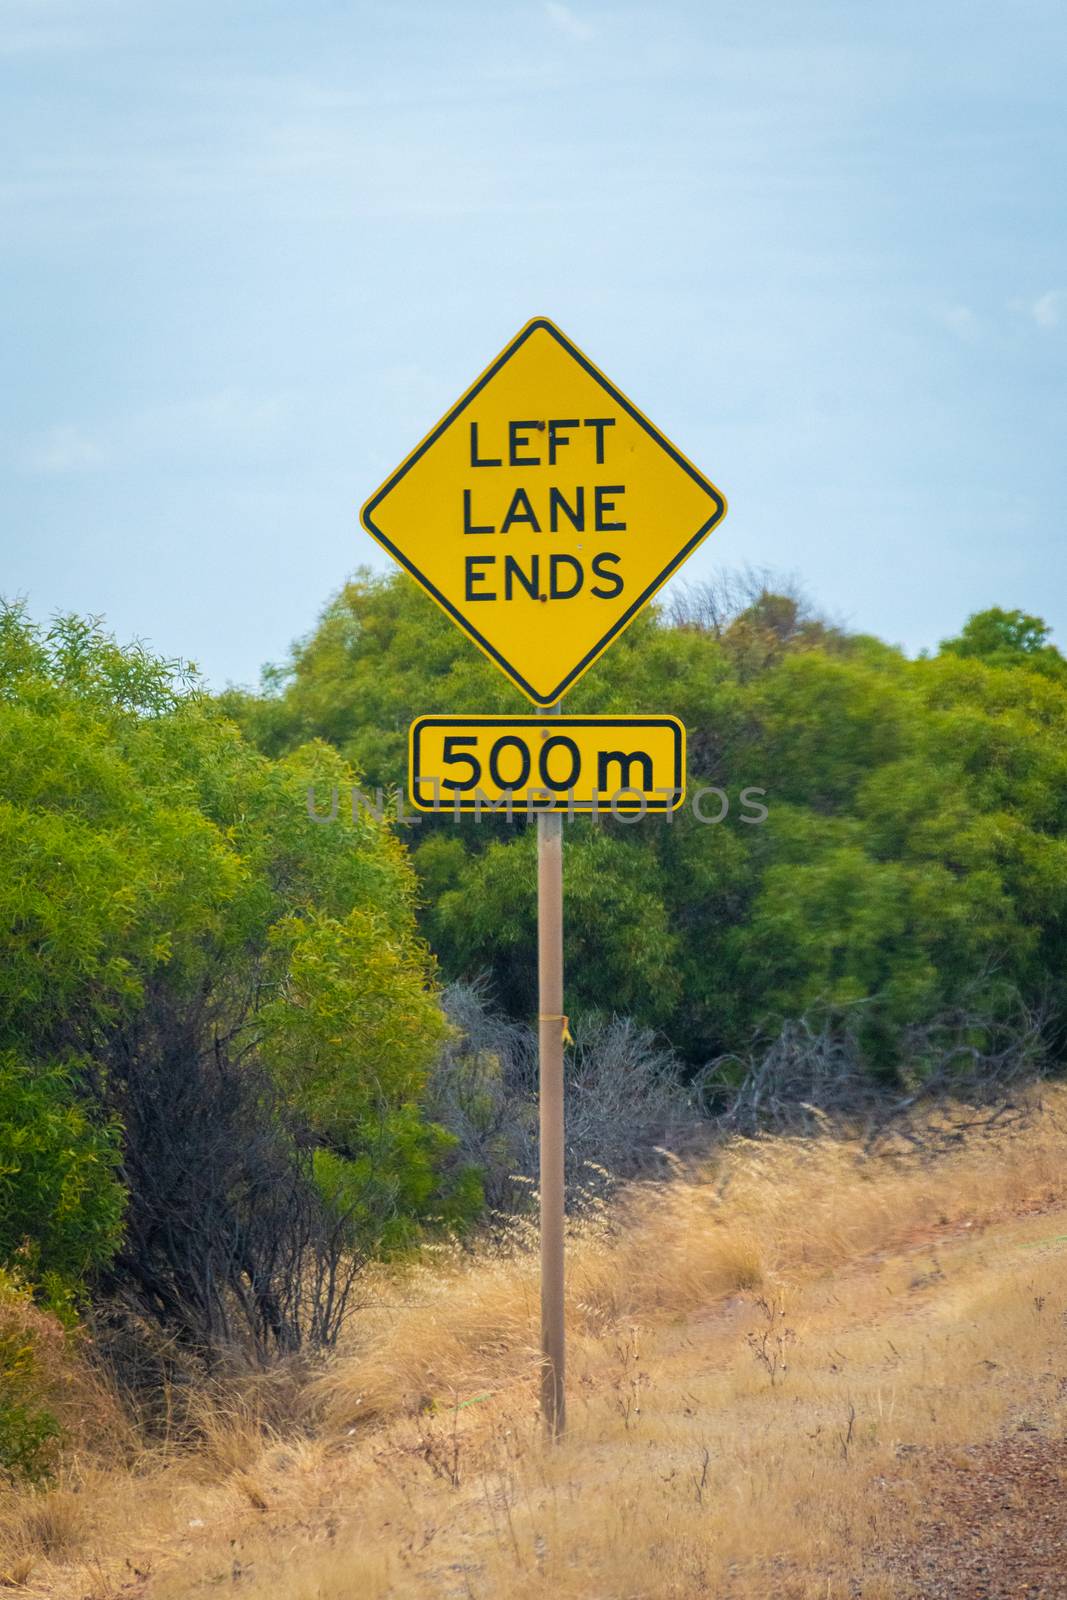 Left lane ends in 500 meters street sign next to australian road